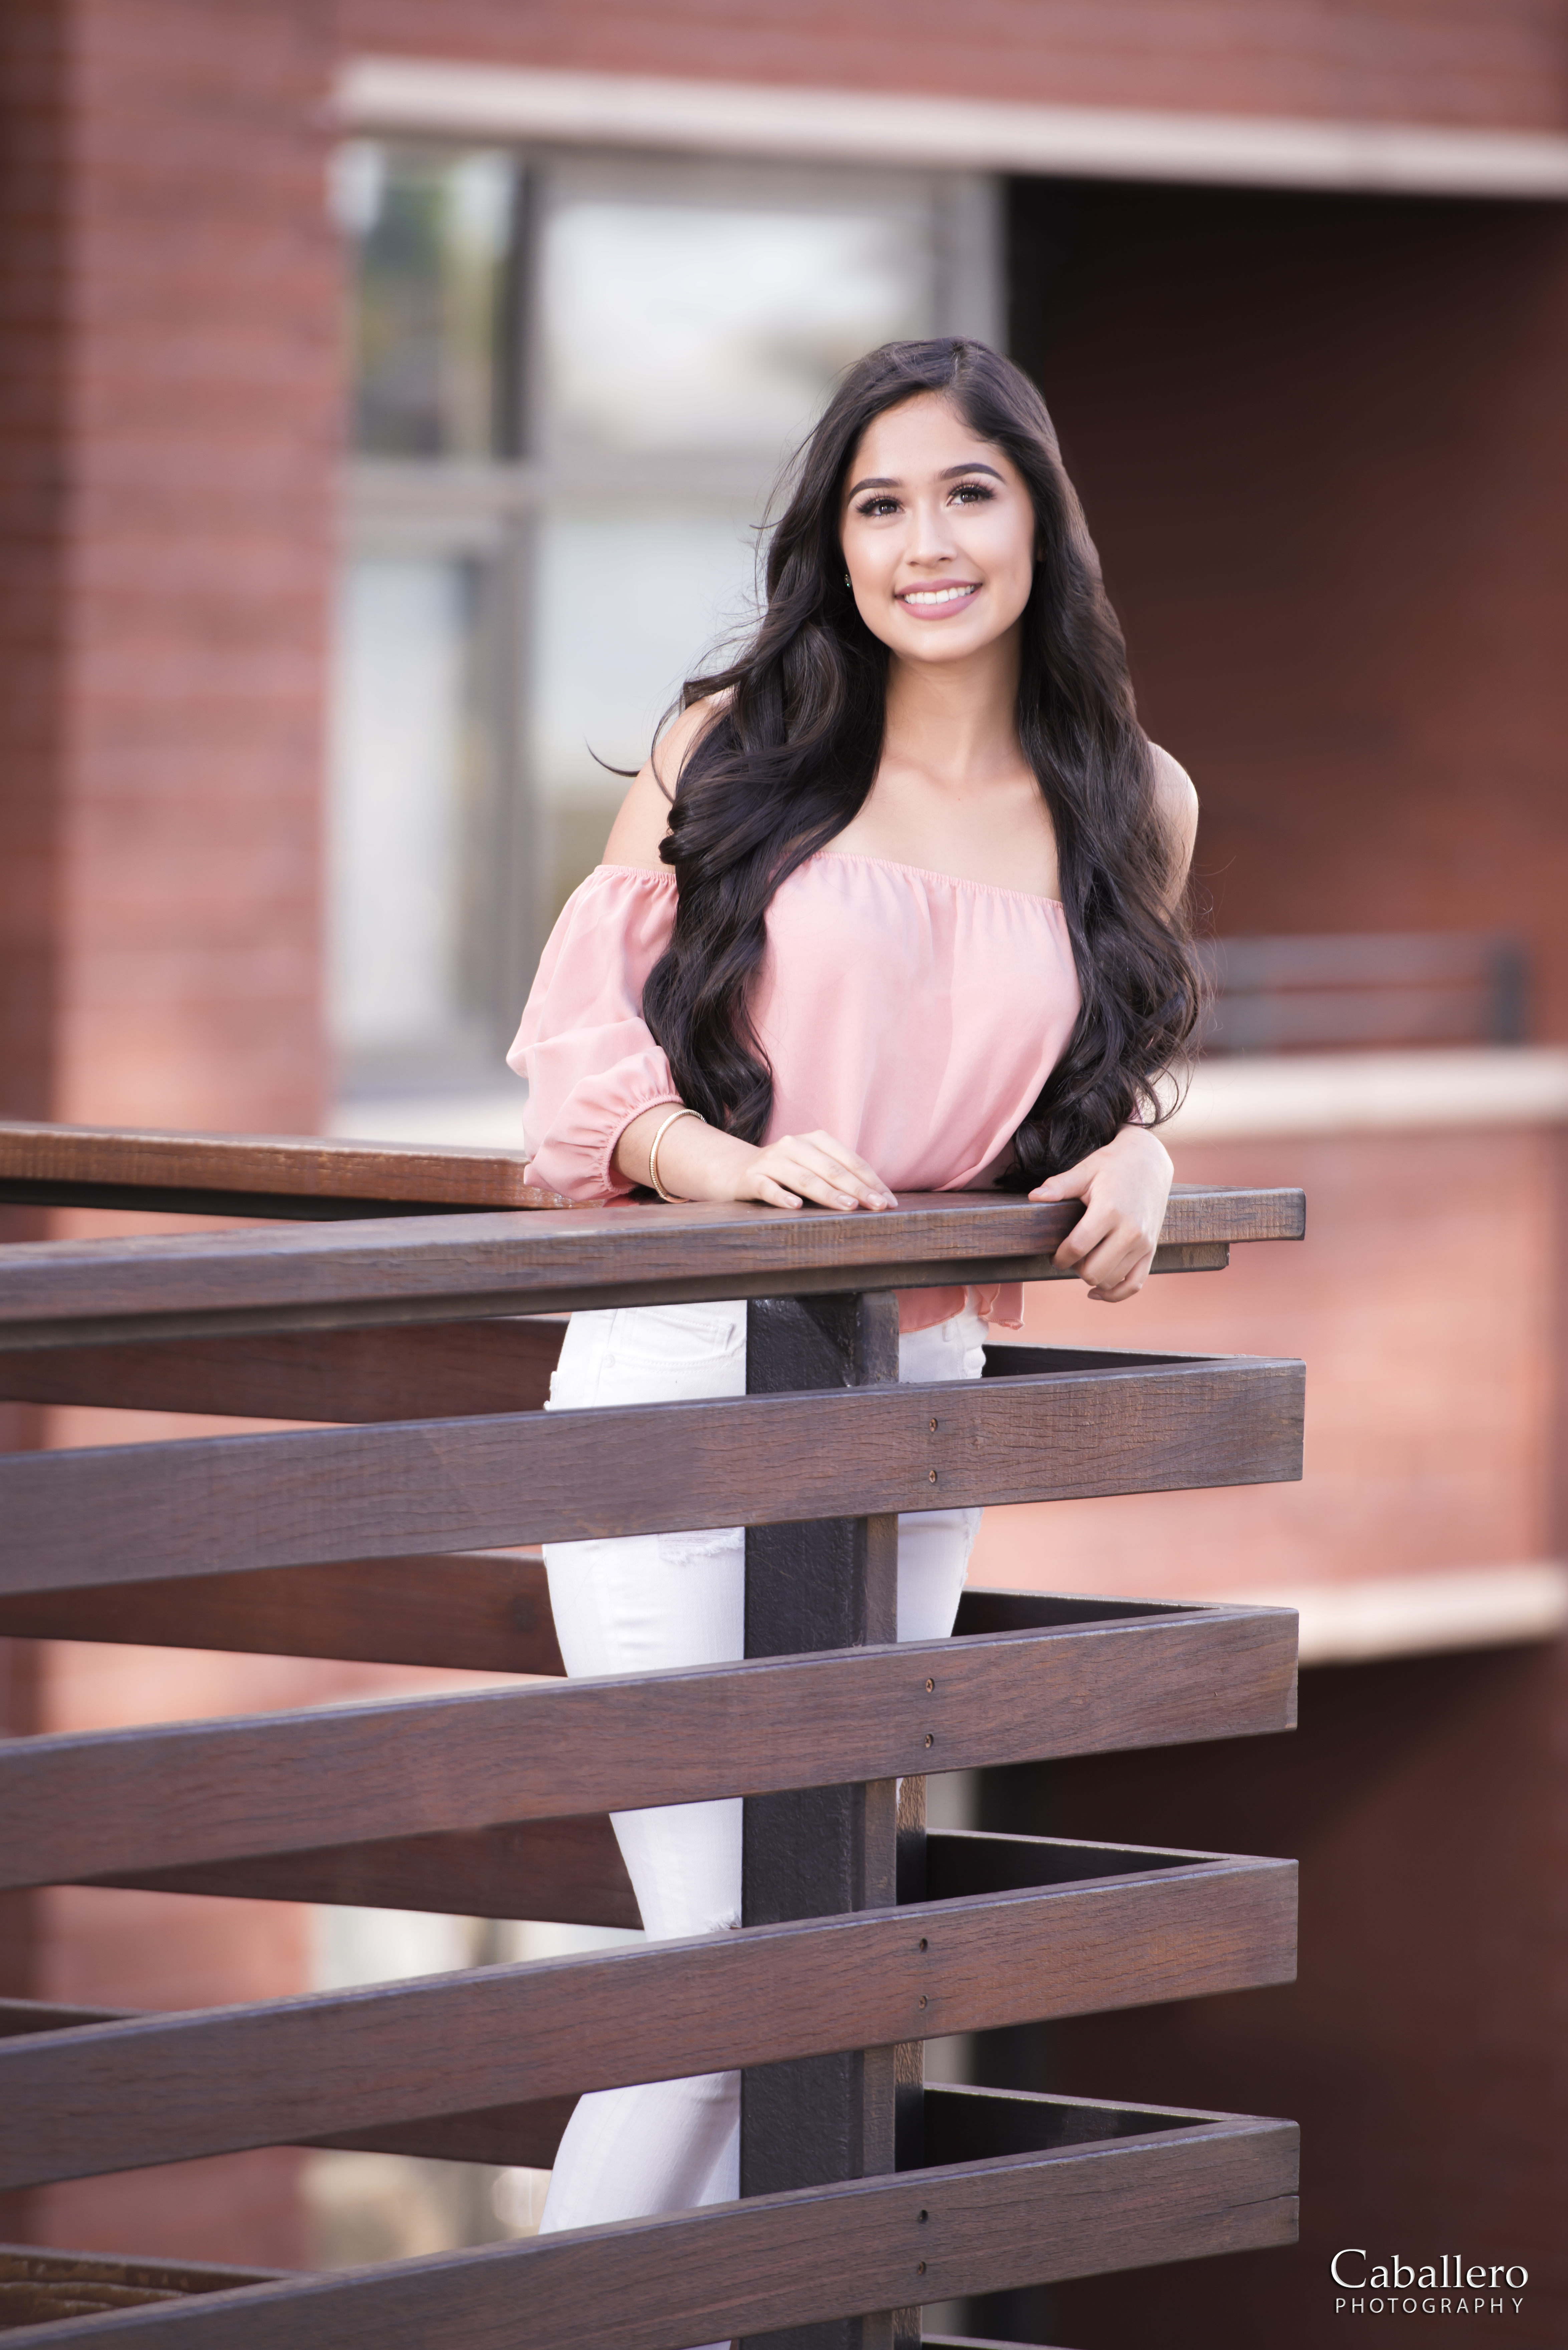 High-School Senior 2019 Portraits of Michelle Sanchez Denver Colorado USA